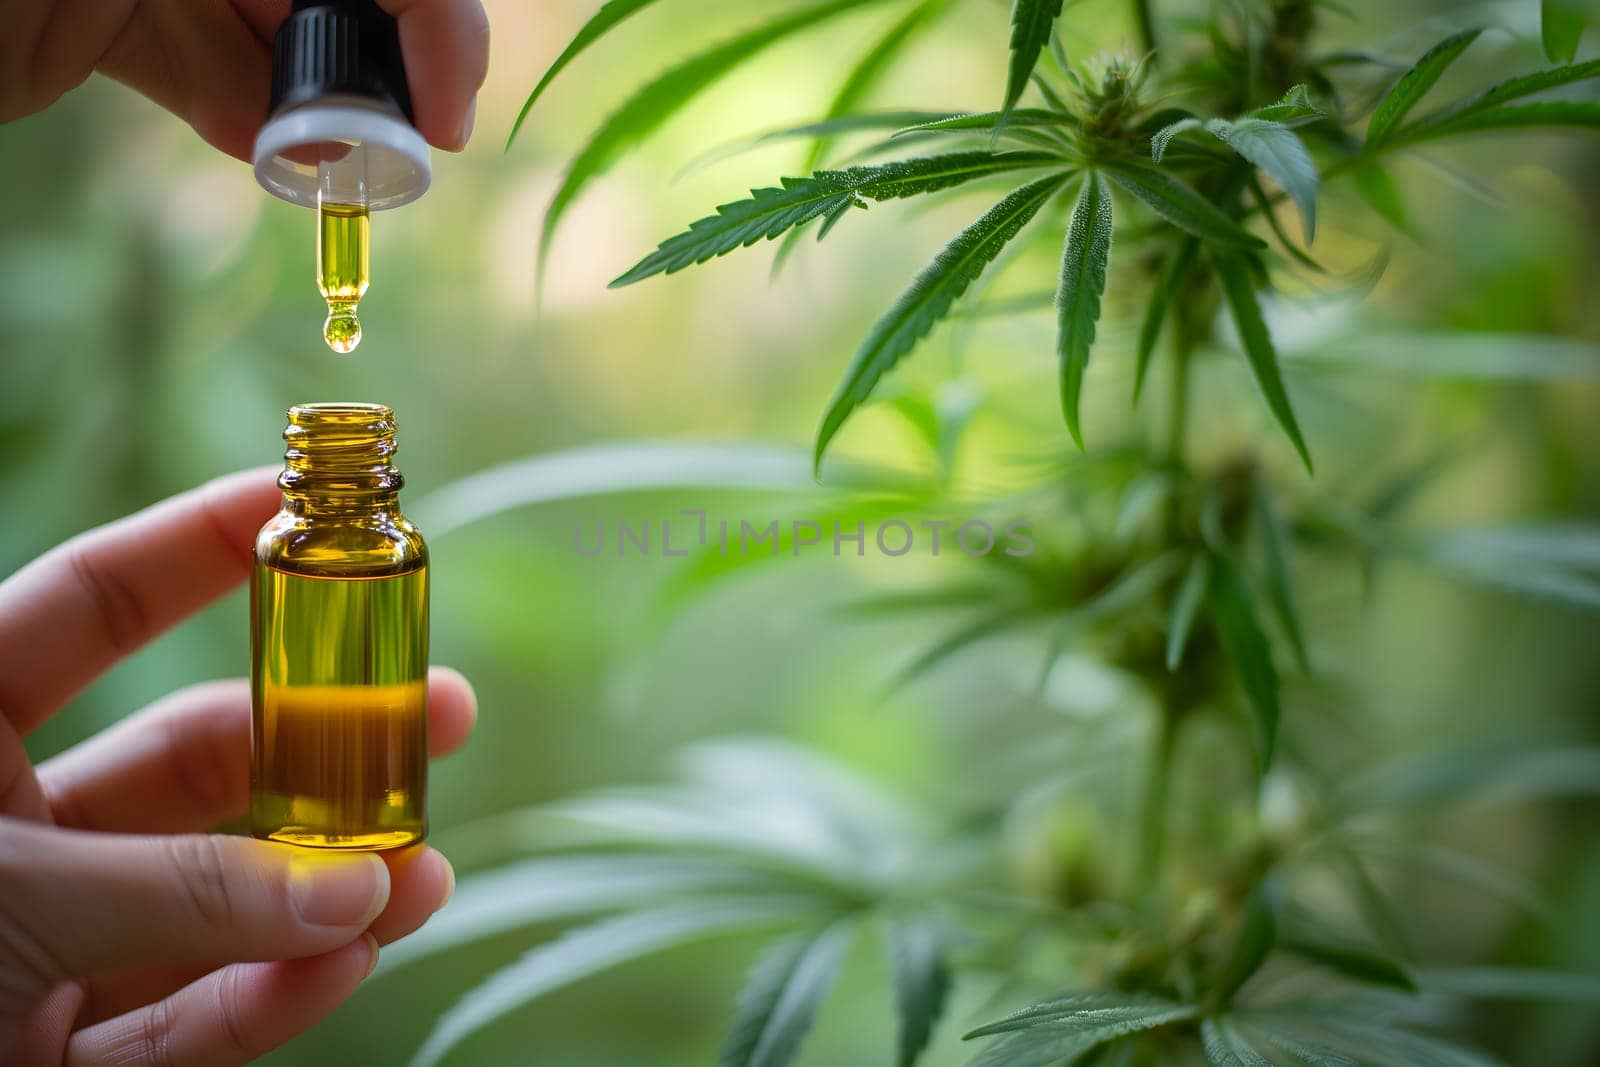 Hand holding CBD hemp oil droplet against marijuana buds - alternative medicine, cannabis oil concept. by z1b